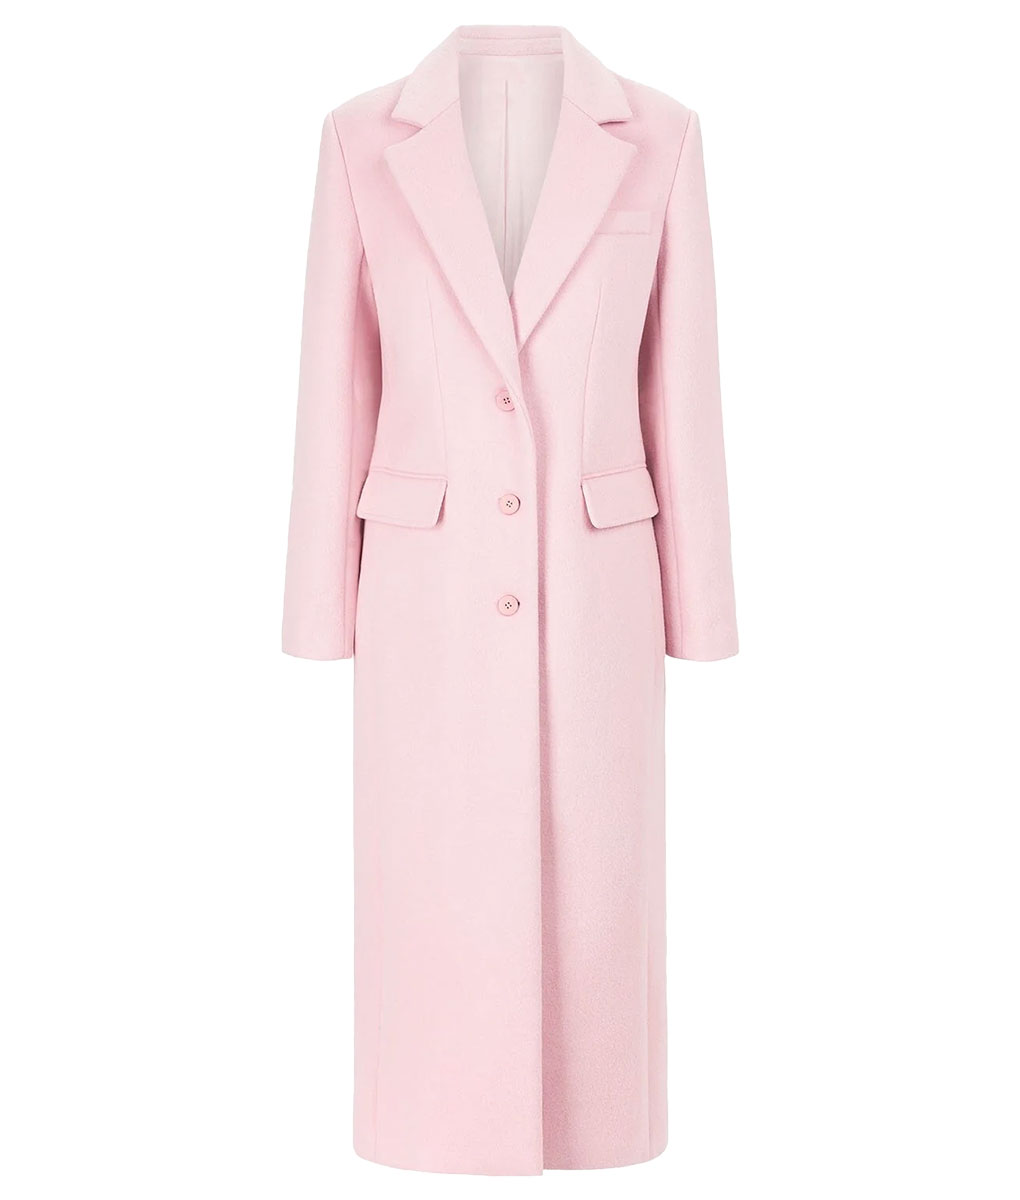 Selena Gomez Rare Beauty Long Pink Coat-1